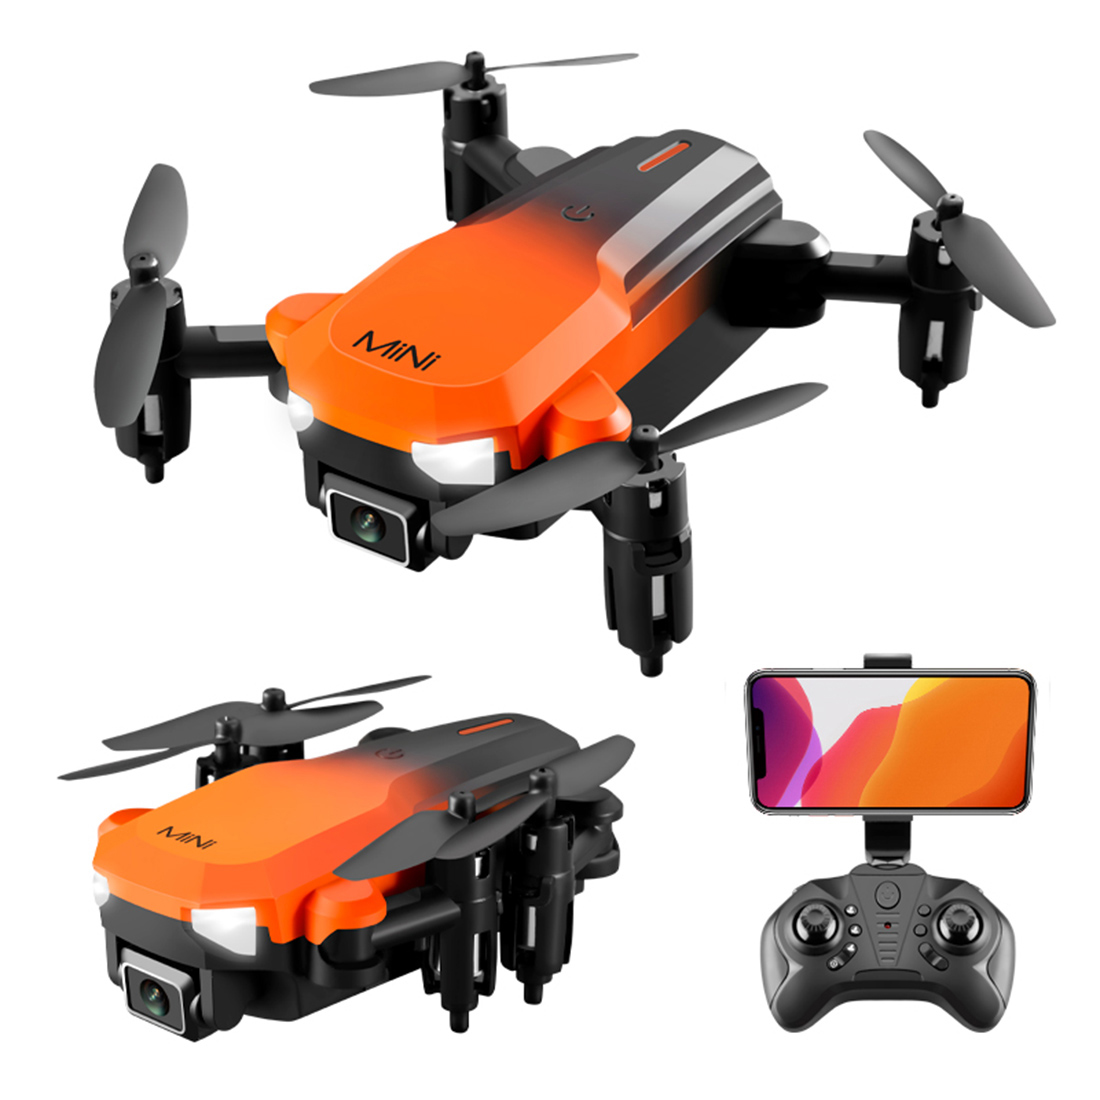 KK9 미니 드론 4K HD 프로페셔널 듀얼 카메라, 원 키 리턴 FPV 광학 회피 드론 Foldable Quadcopter Toy